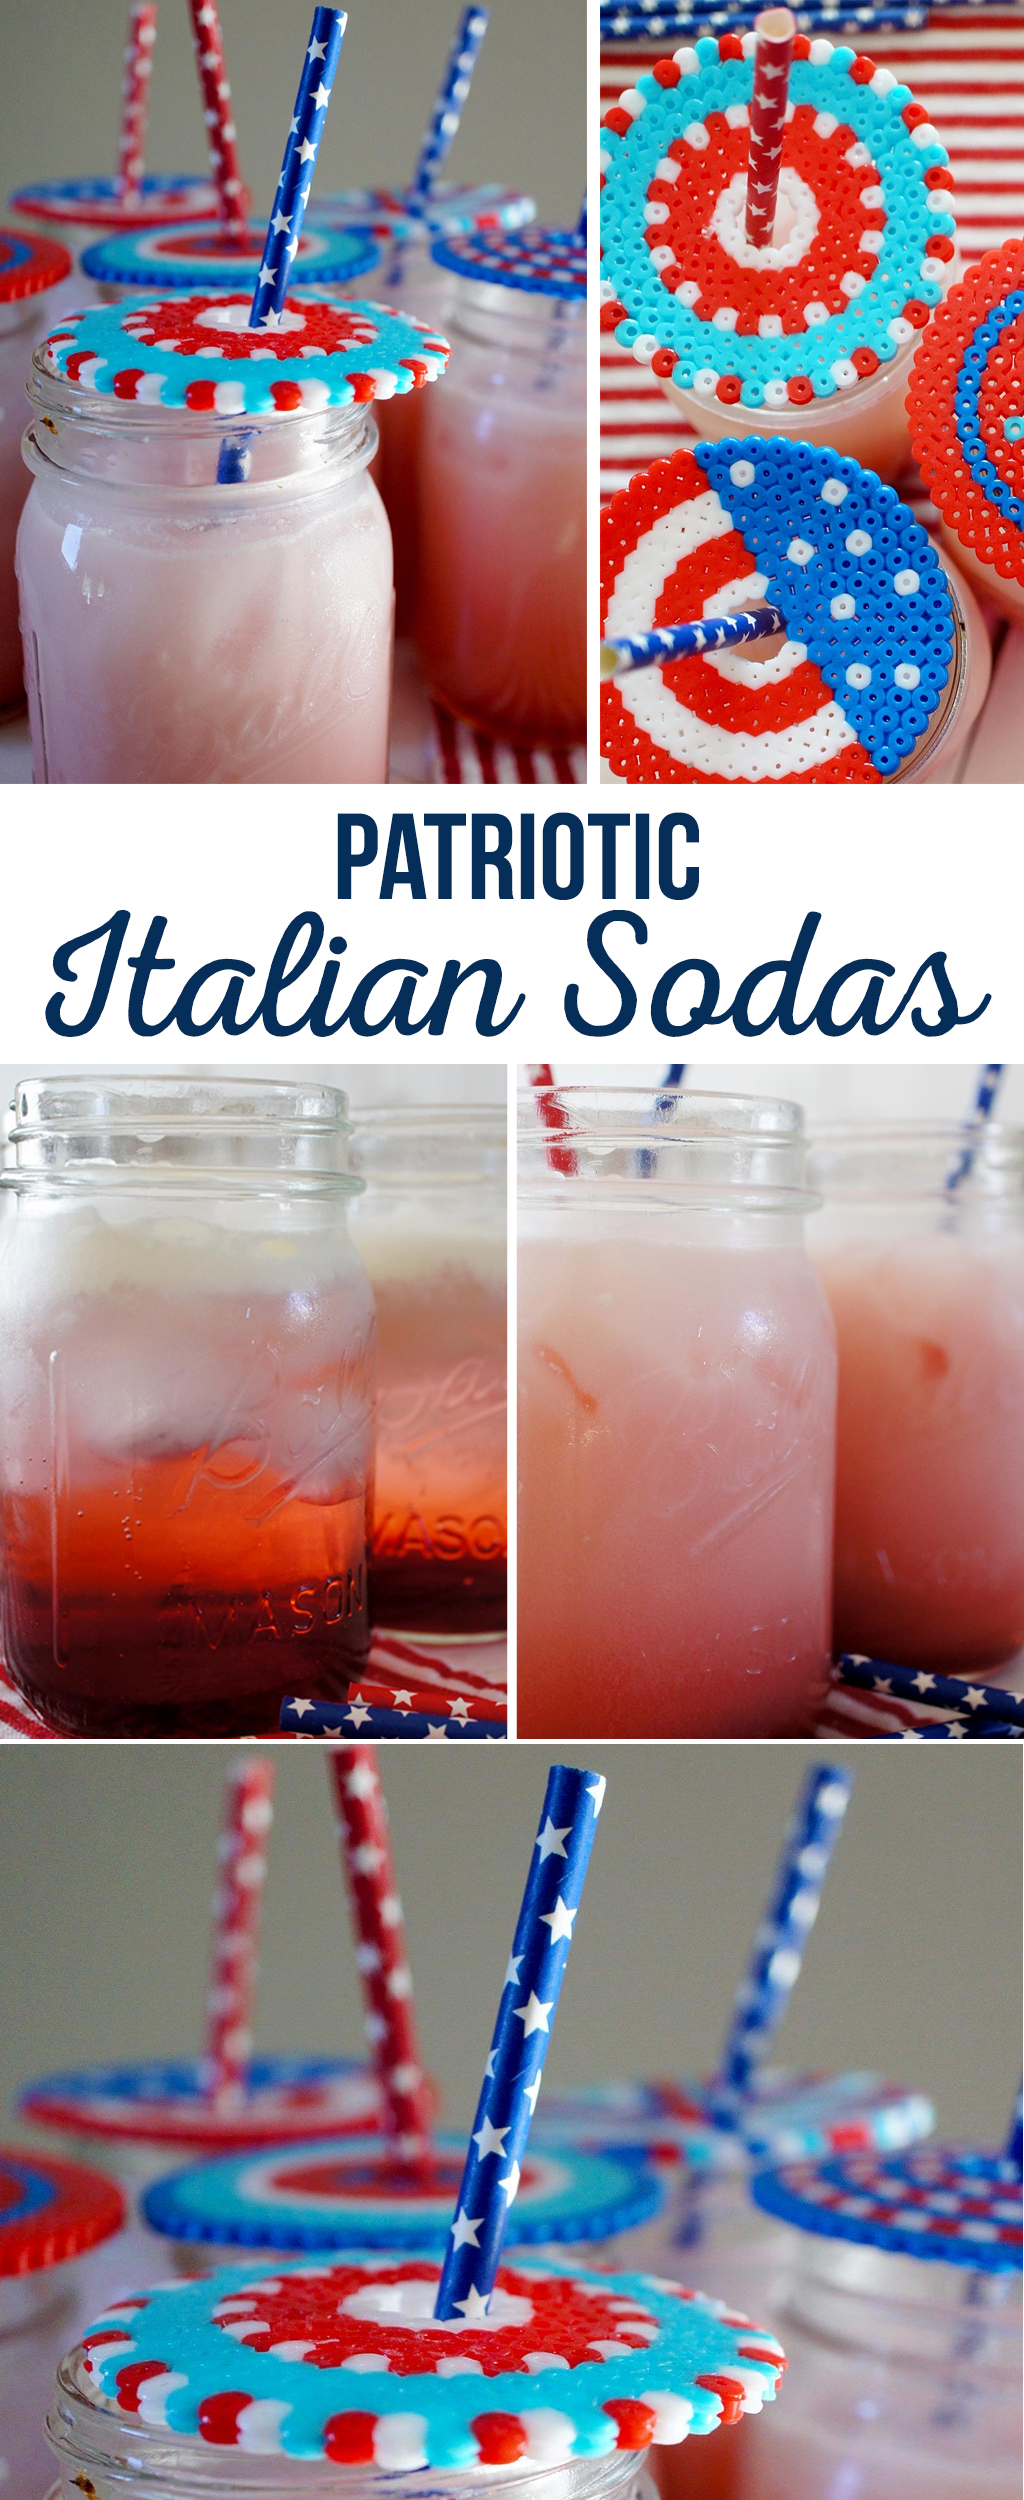 Patriotic Italian Sodas